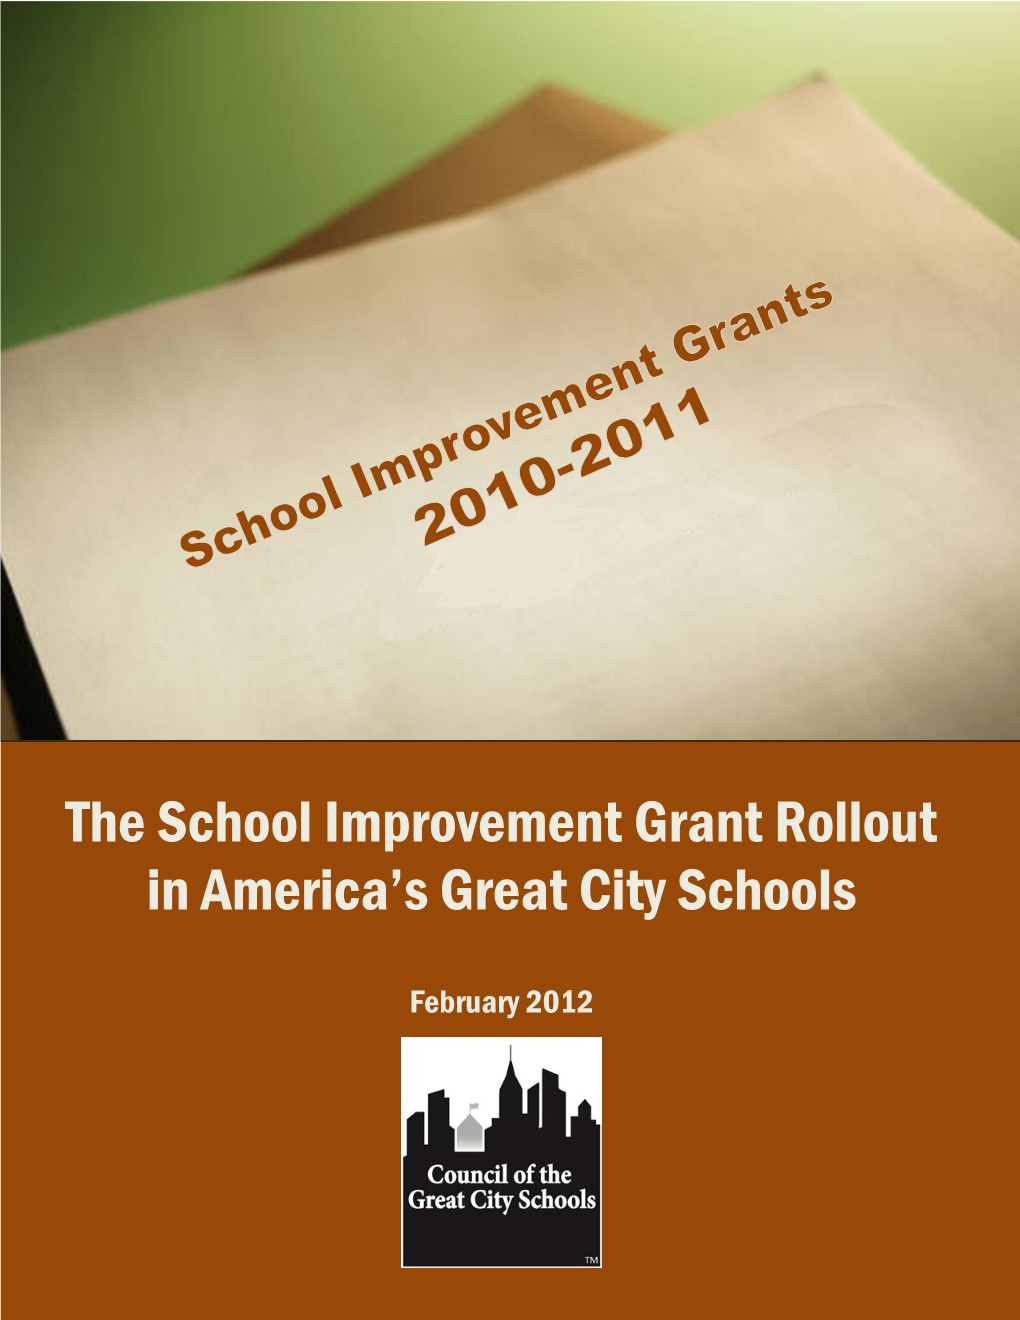 The School Improvement Grant Rollout in America's Great City